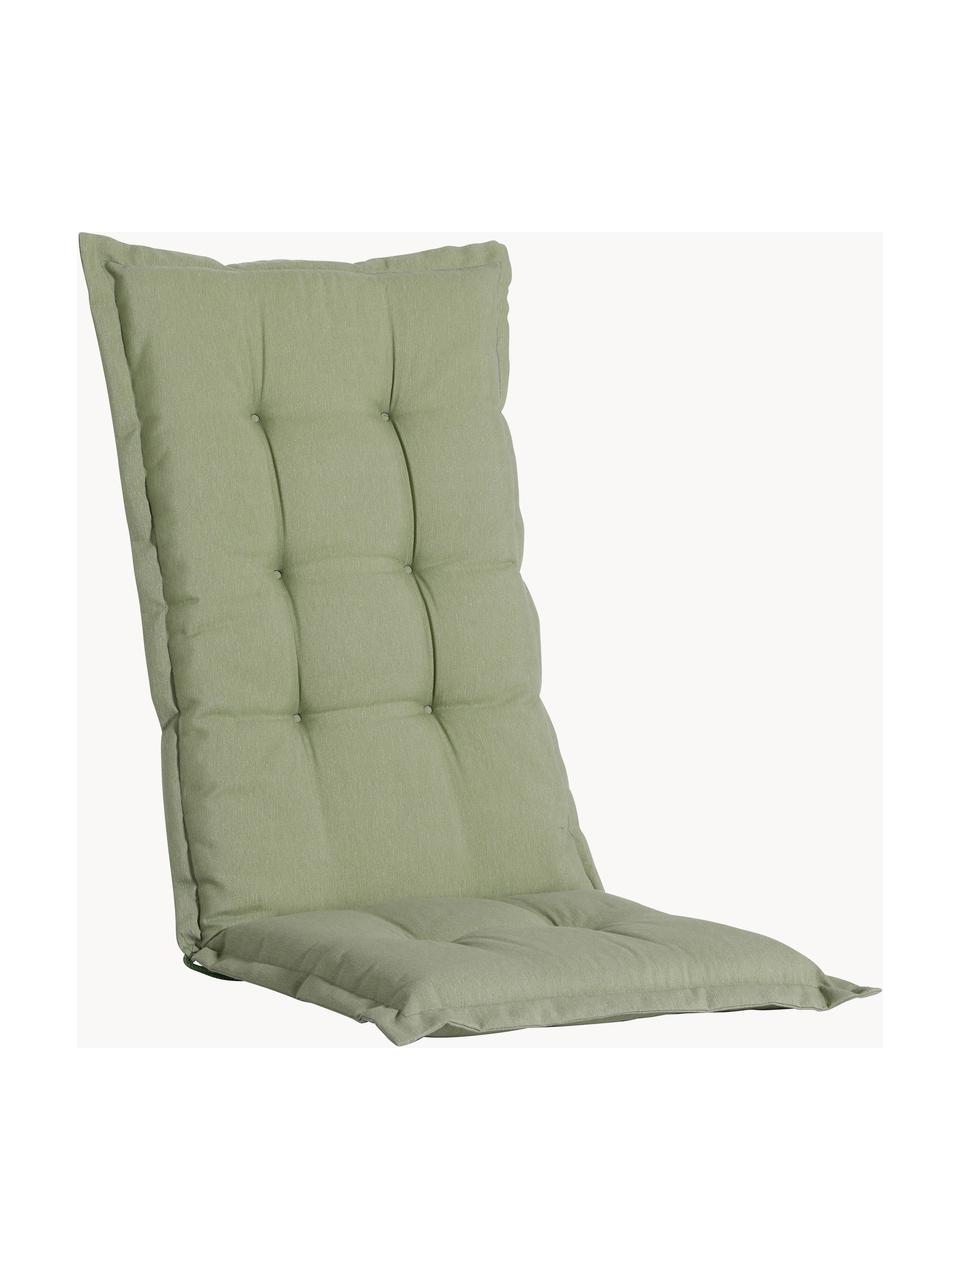 Cojín para silla con respaldo Panama, 50% algodón, 45% poliéster, 5% otras fibras, Verde, An 42 x L 120 cm